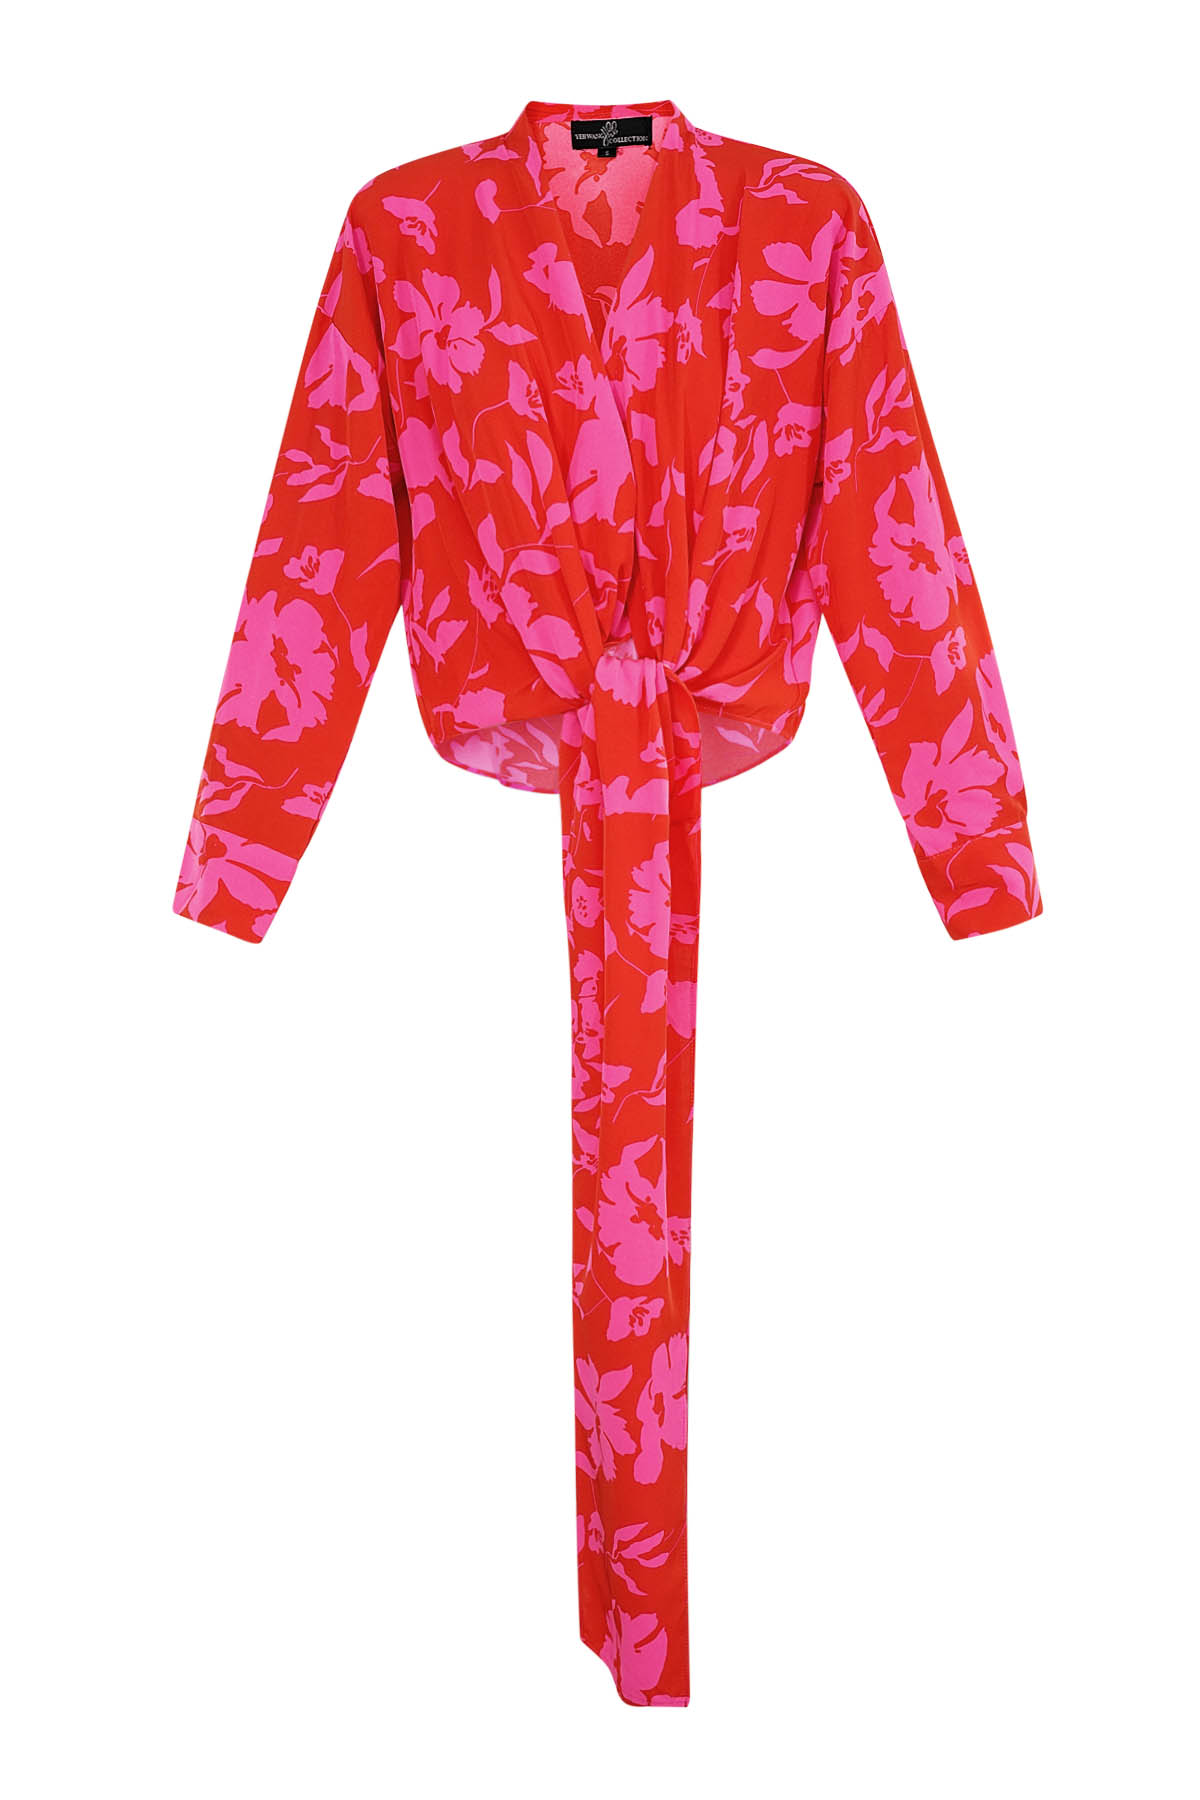 Chemisier cache-cœur imprimé fleuri rose rouge